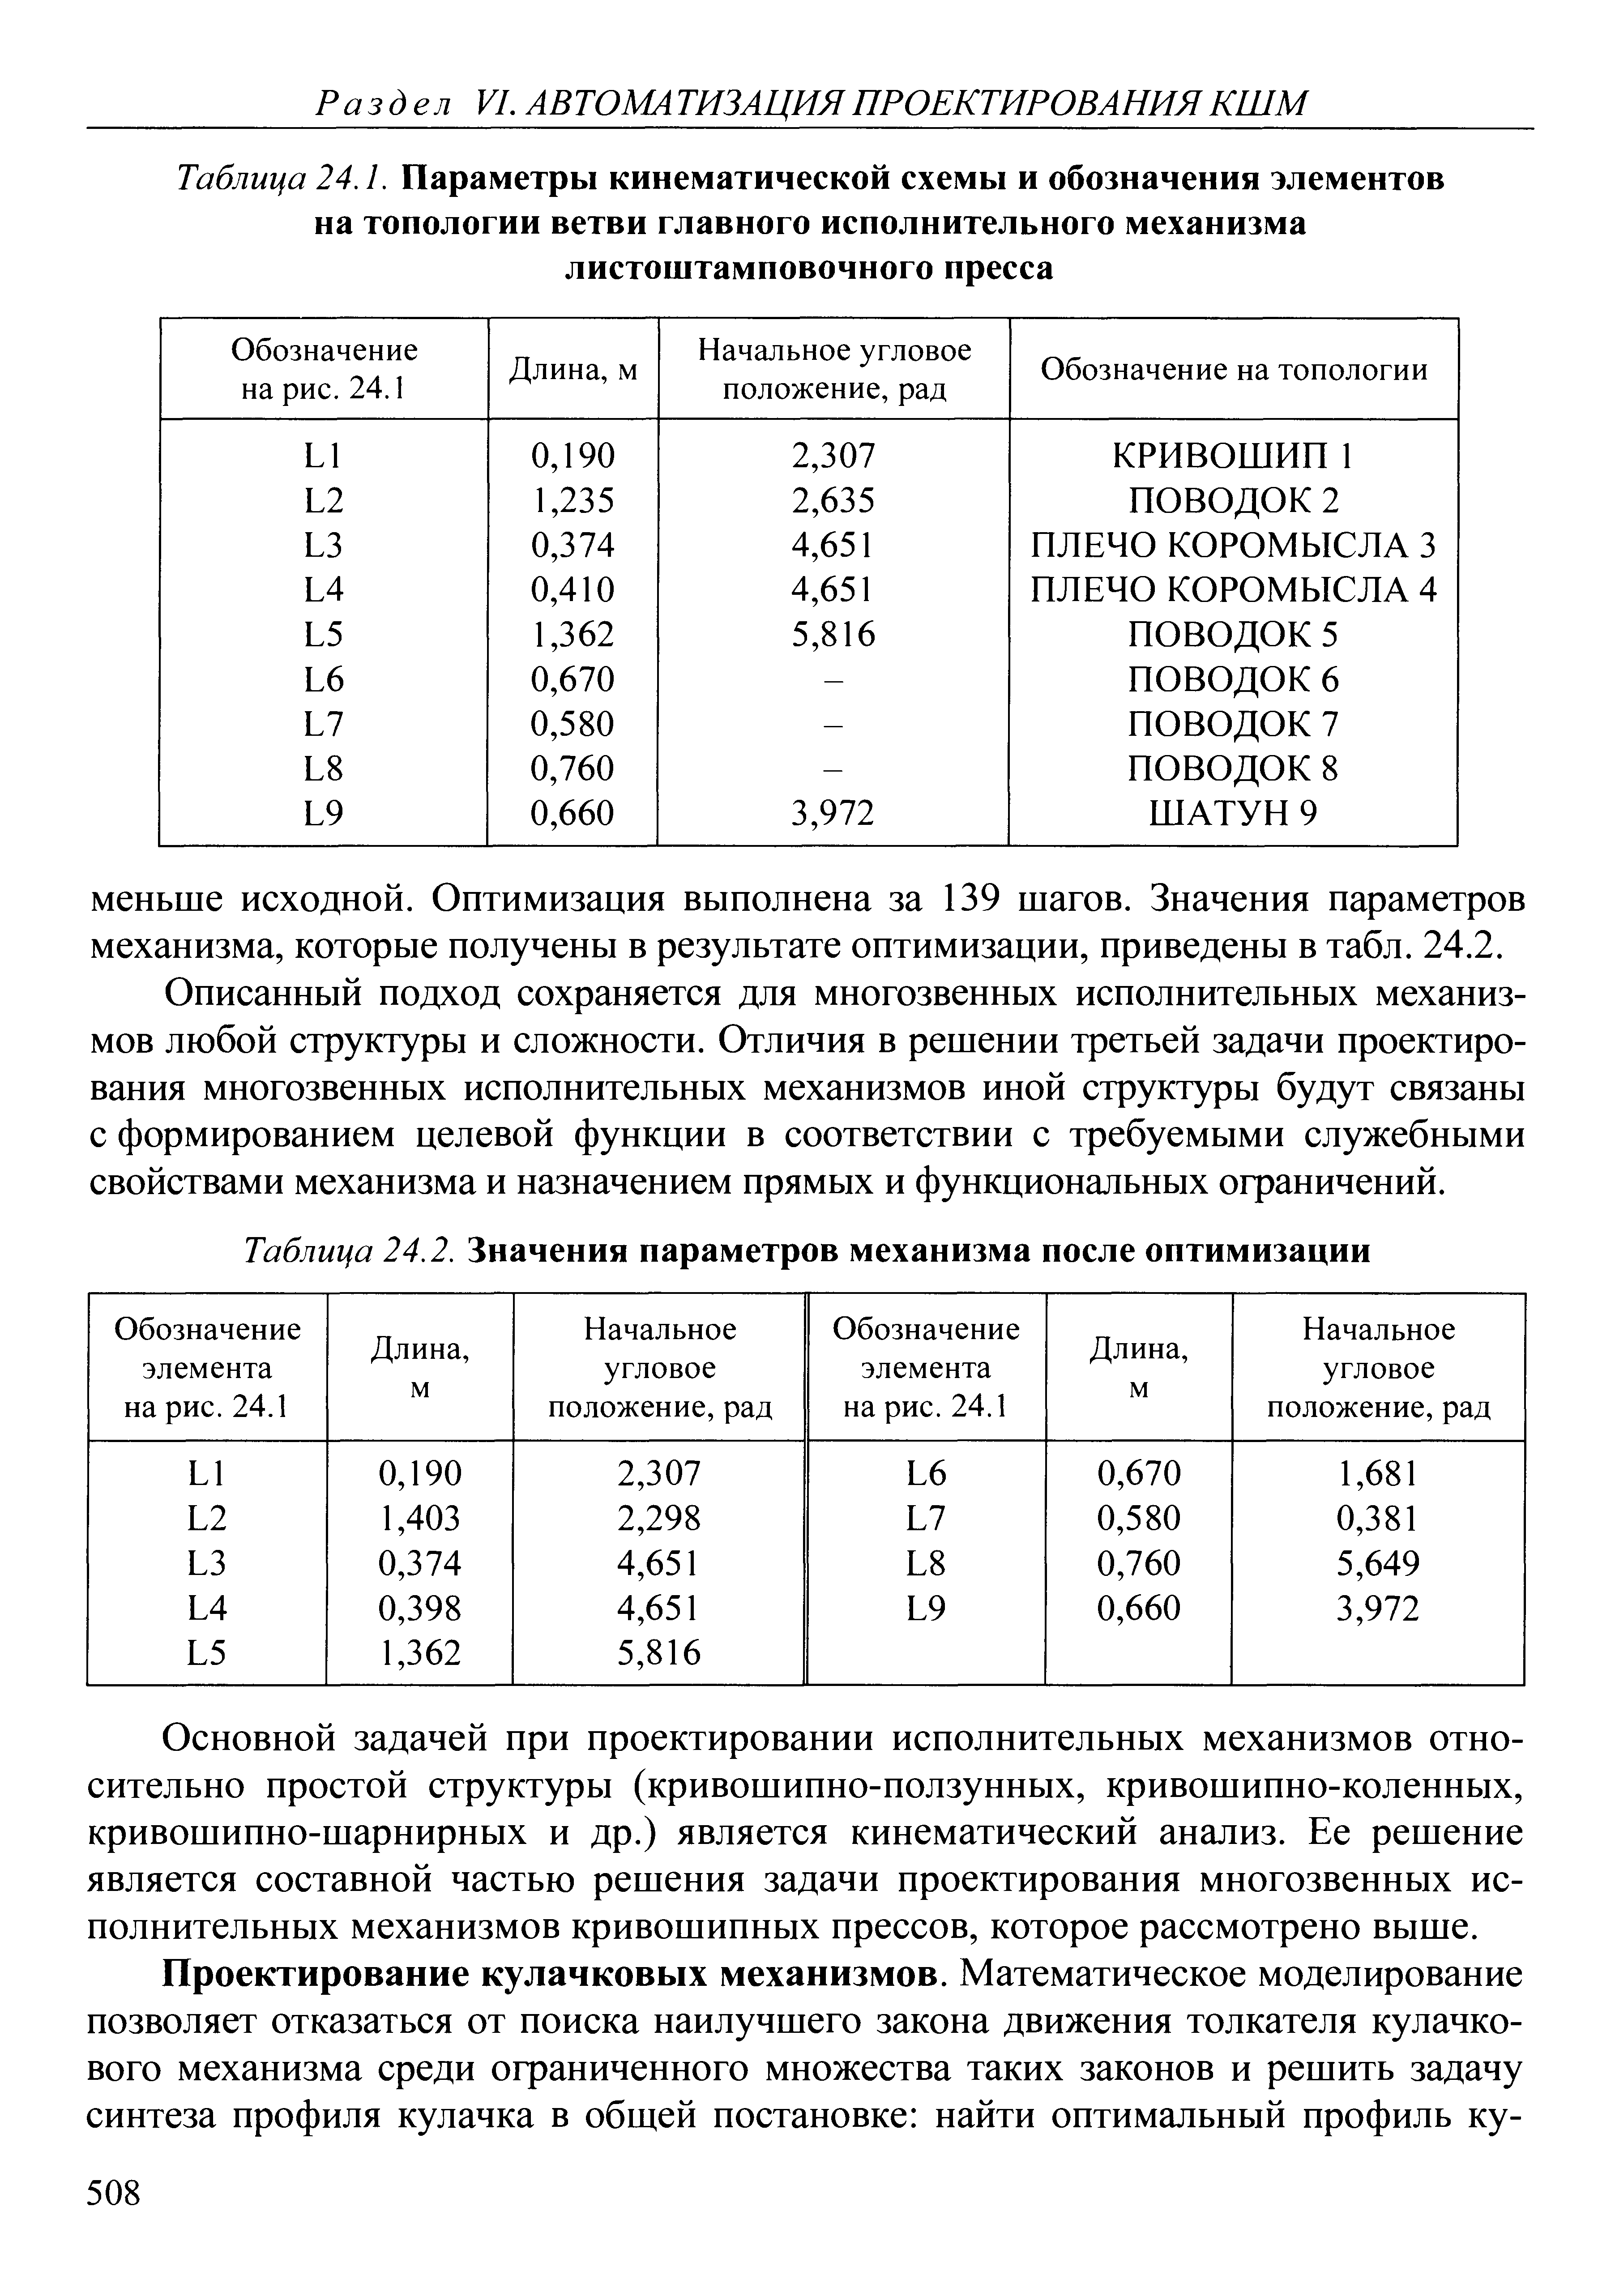 Таблица 24.2. Значения <a href="/info/57072">параметров механизма</a> после оптимизации
